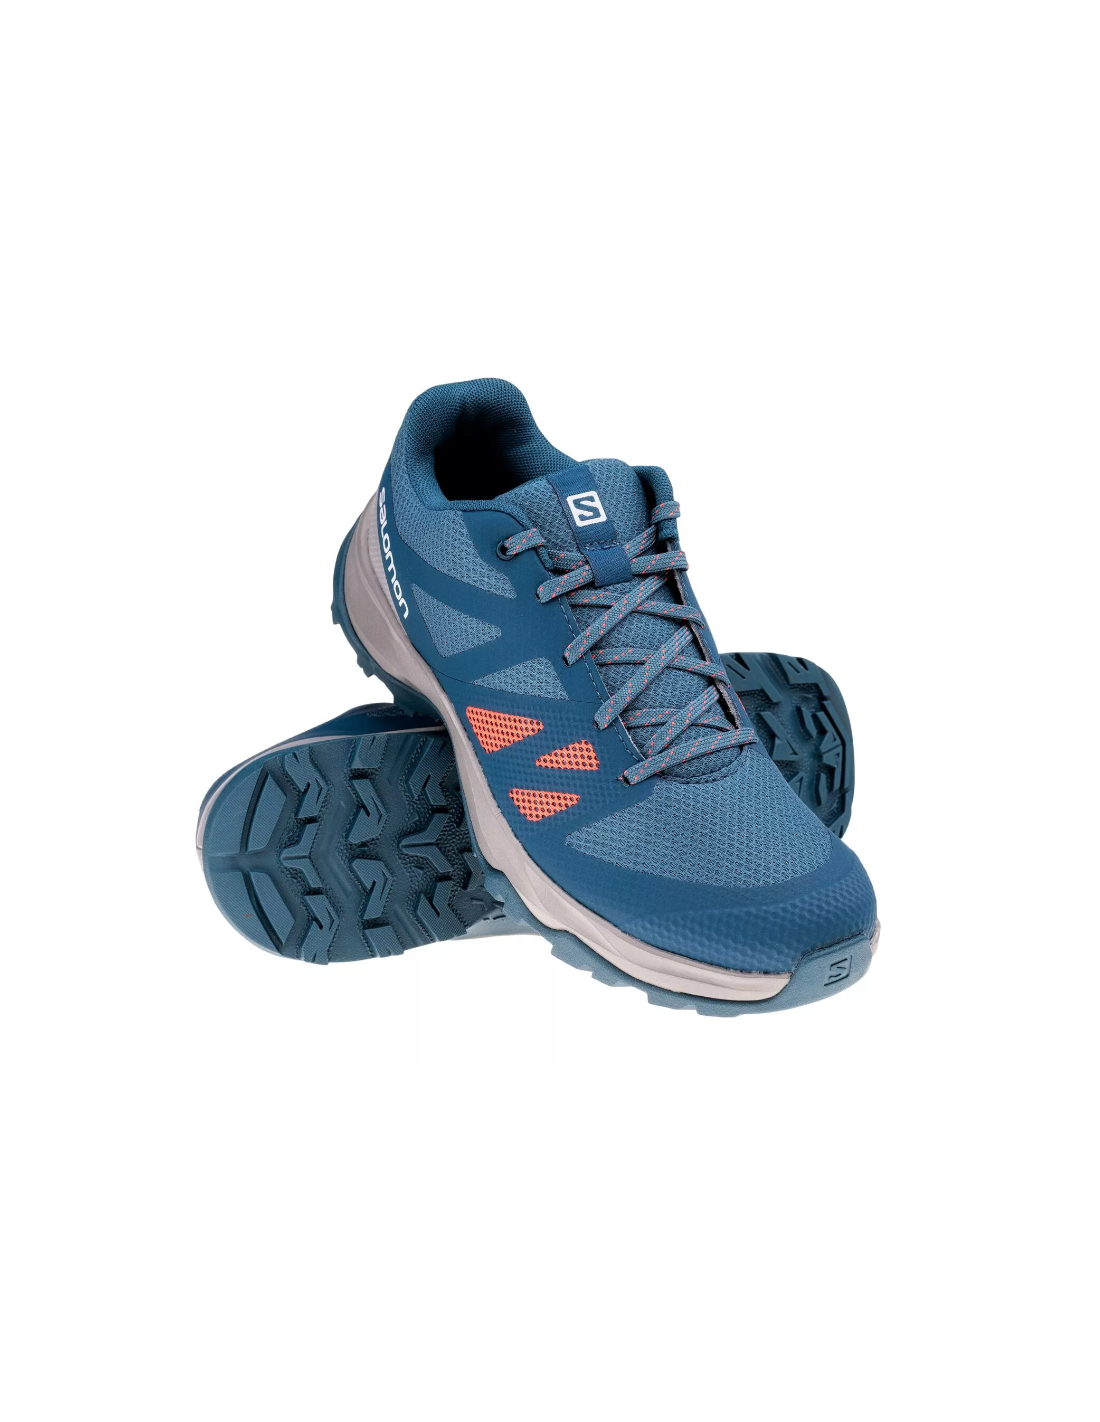 SALOMON: Zapatillas para mujer, Azul Oscuro  Zapatillas Salomon 416296 en  línea en